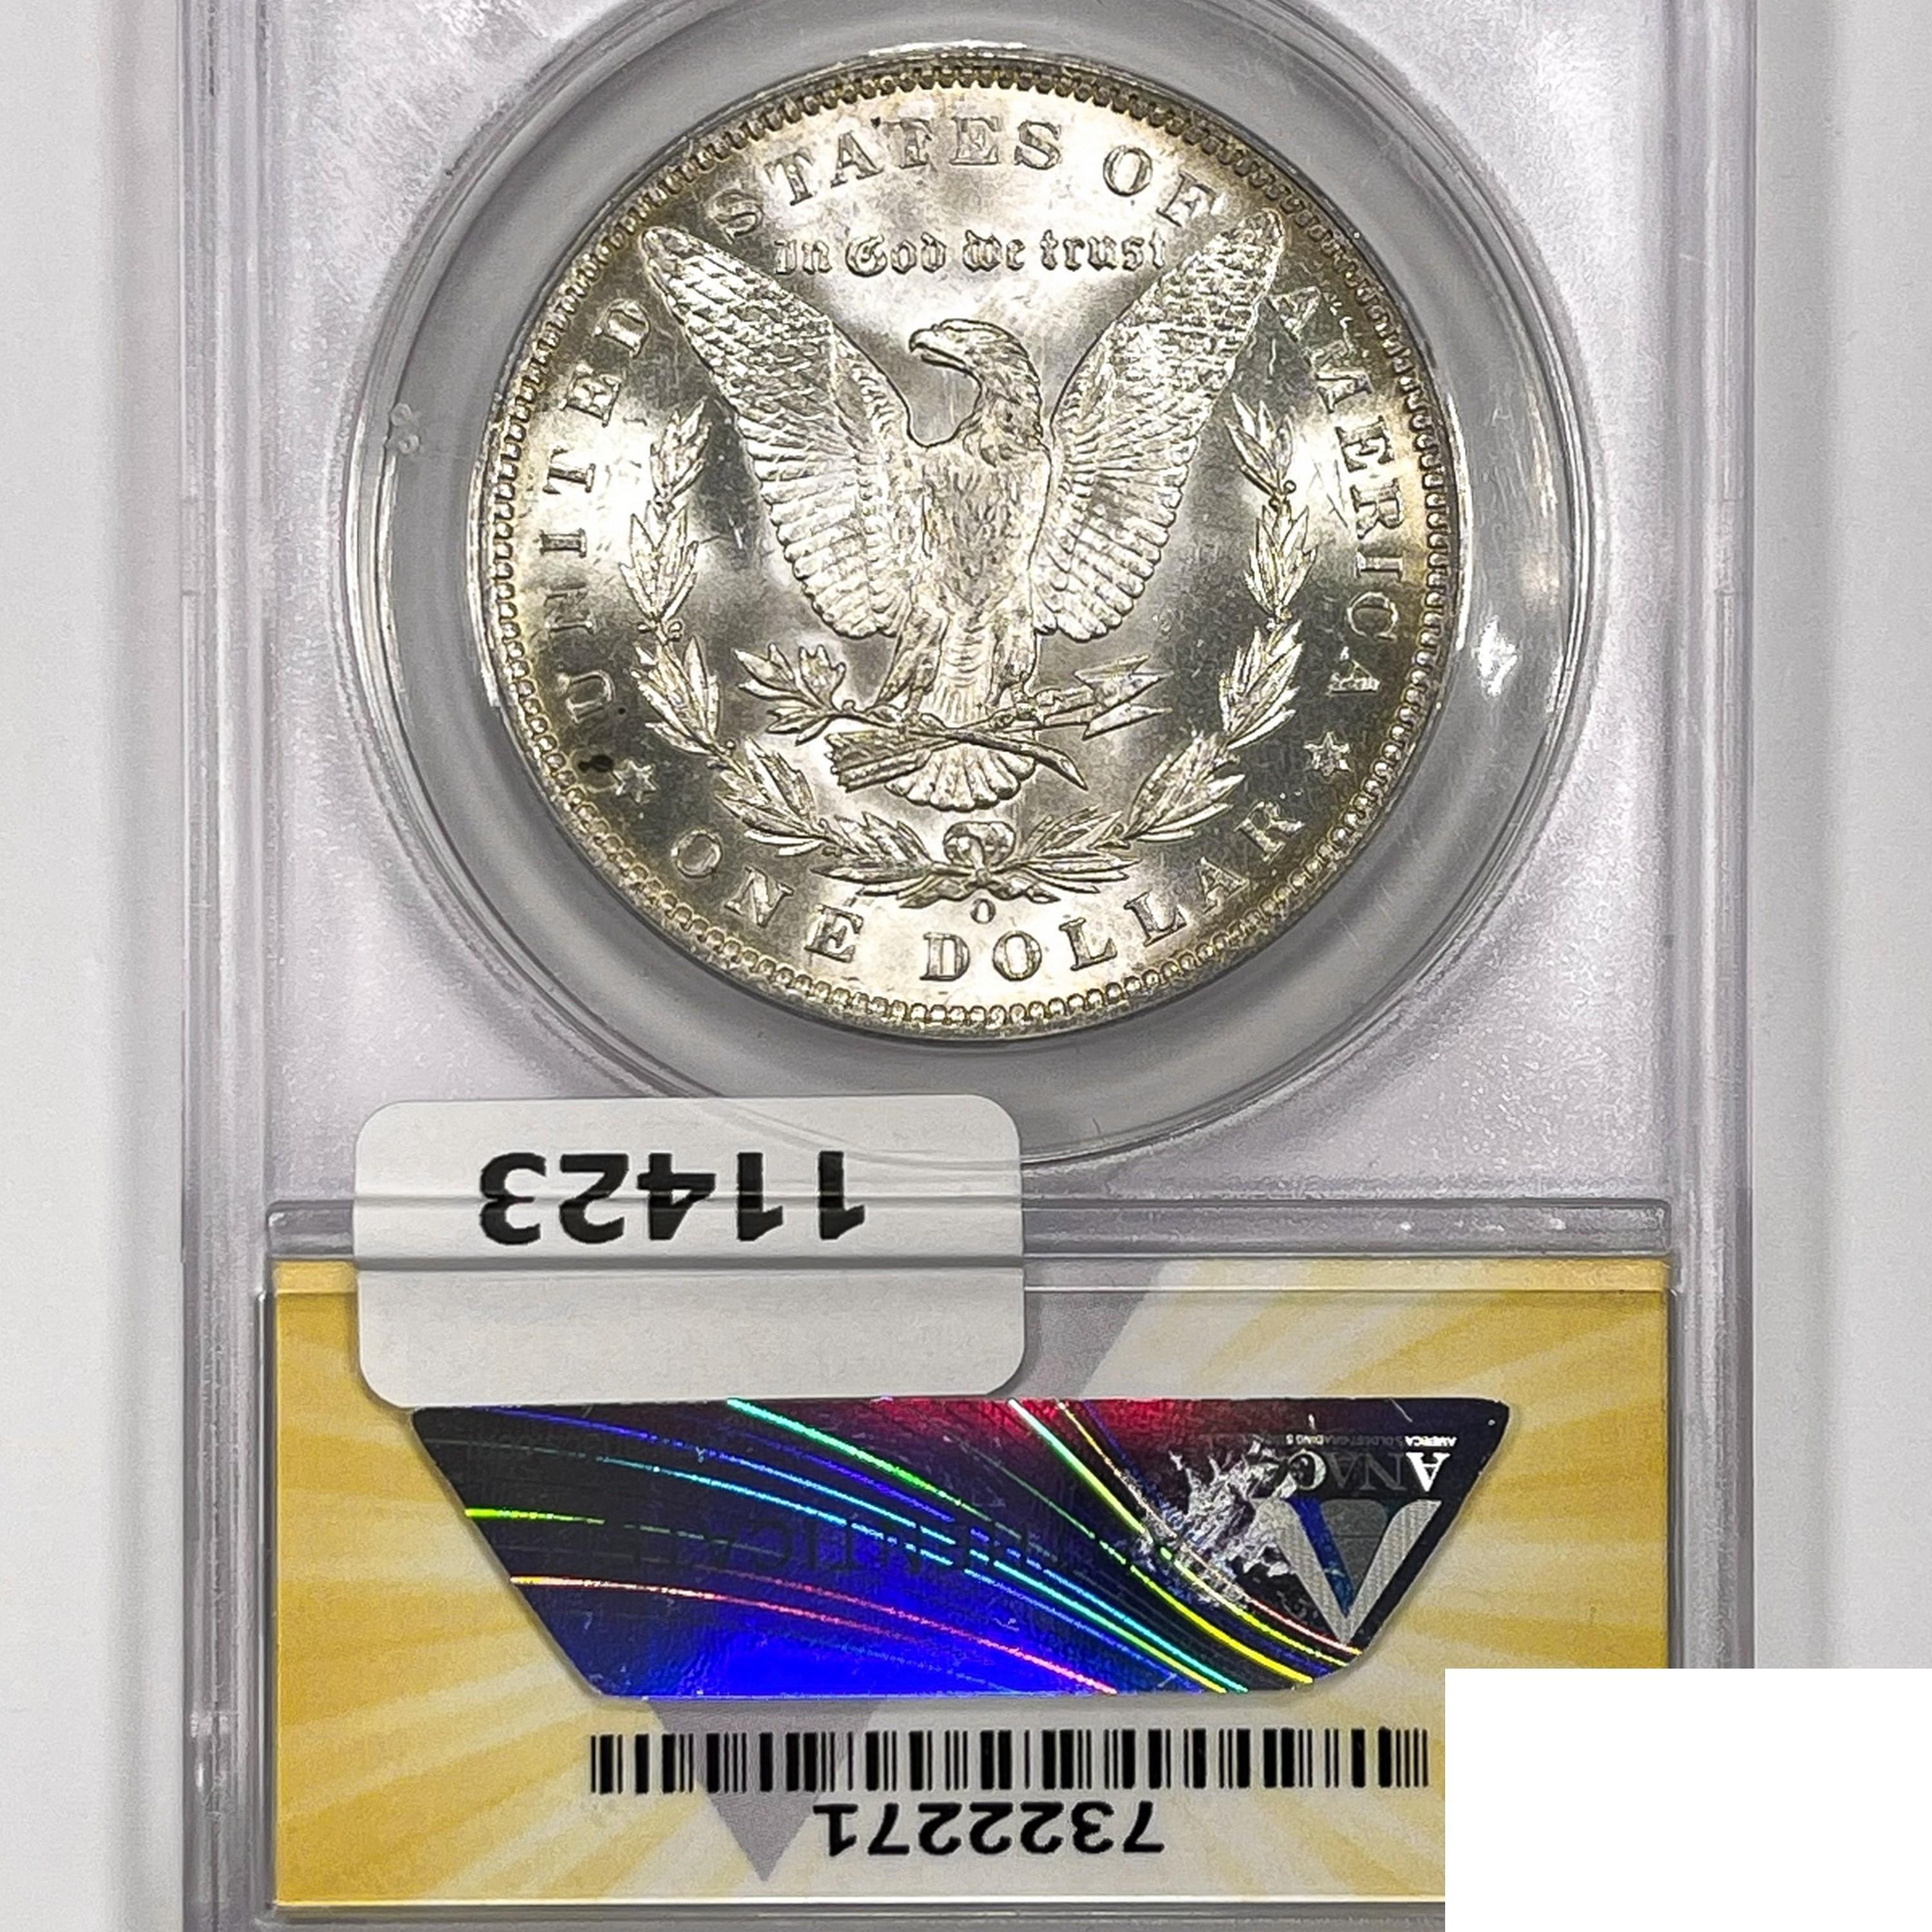 1888-O Morgan Silver Dollar ANACS MS62